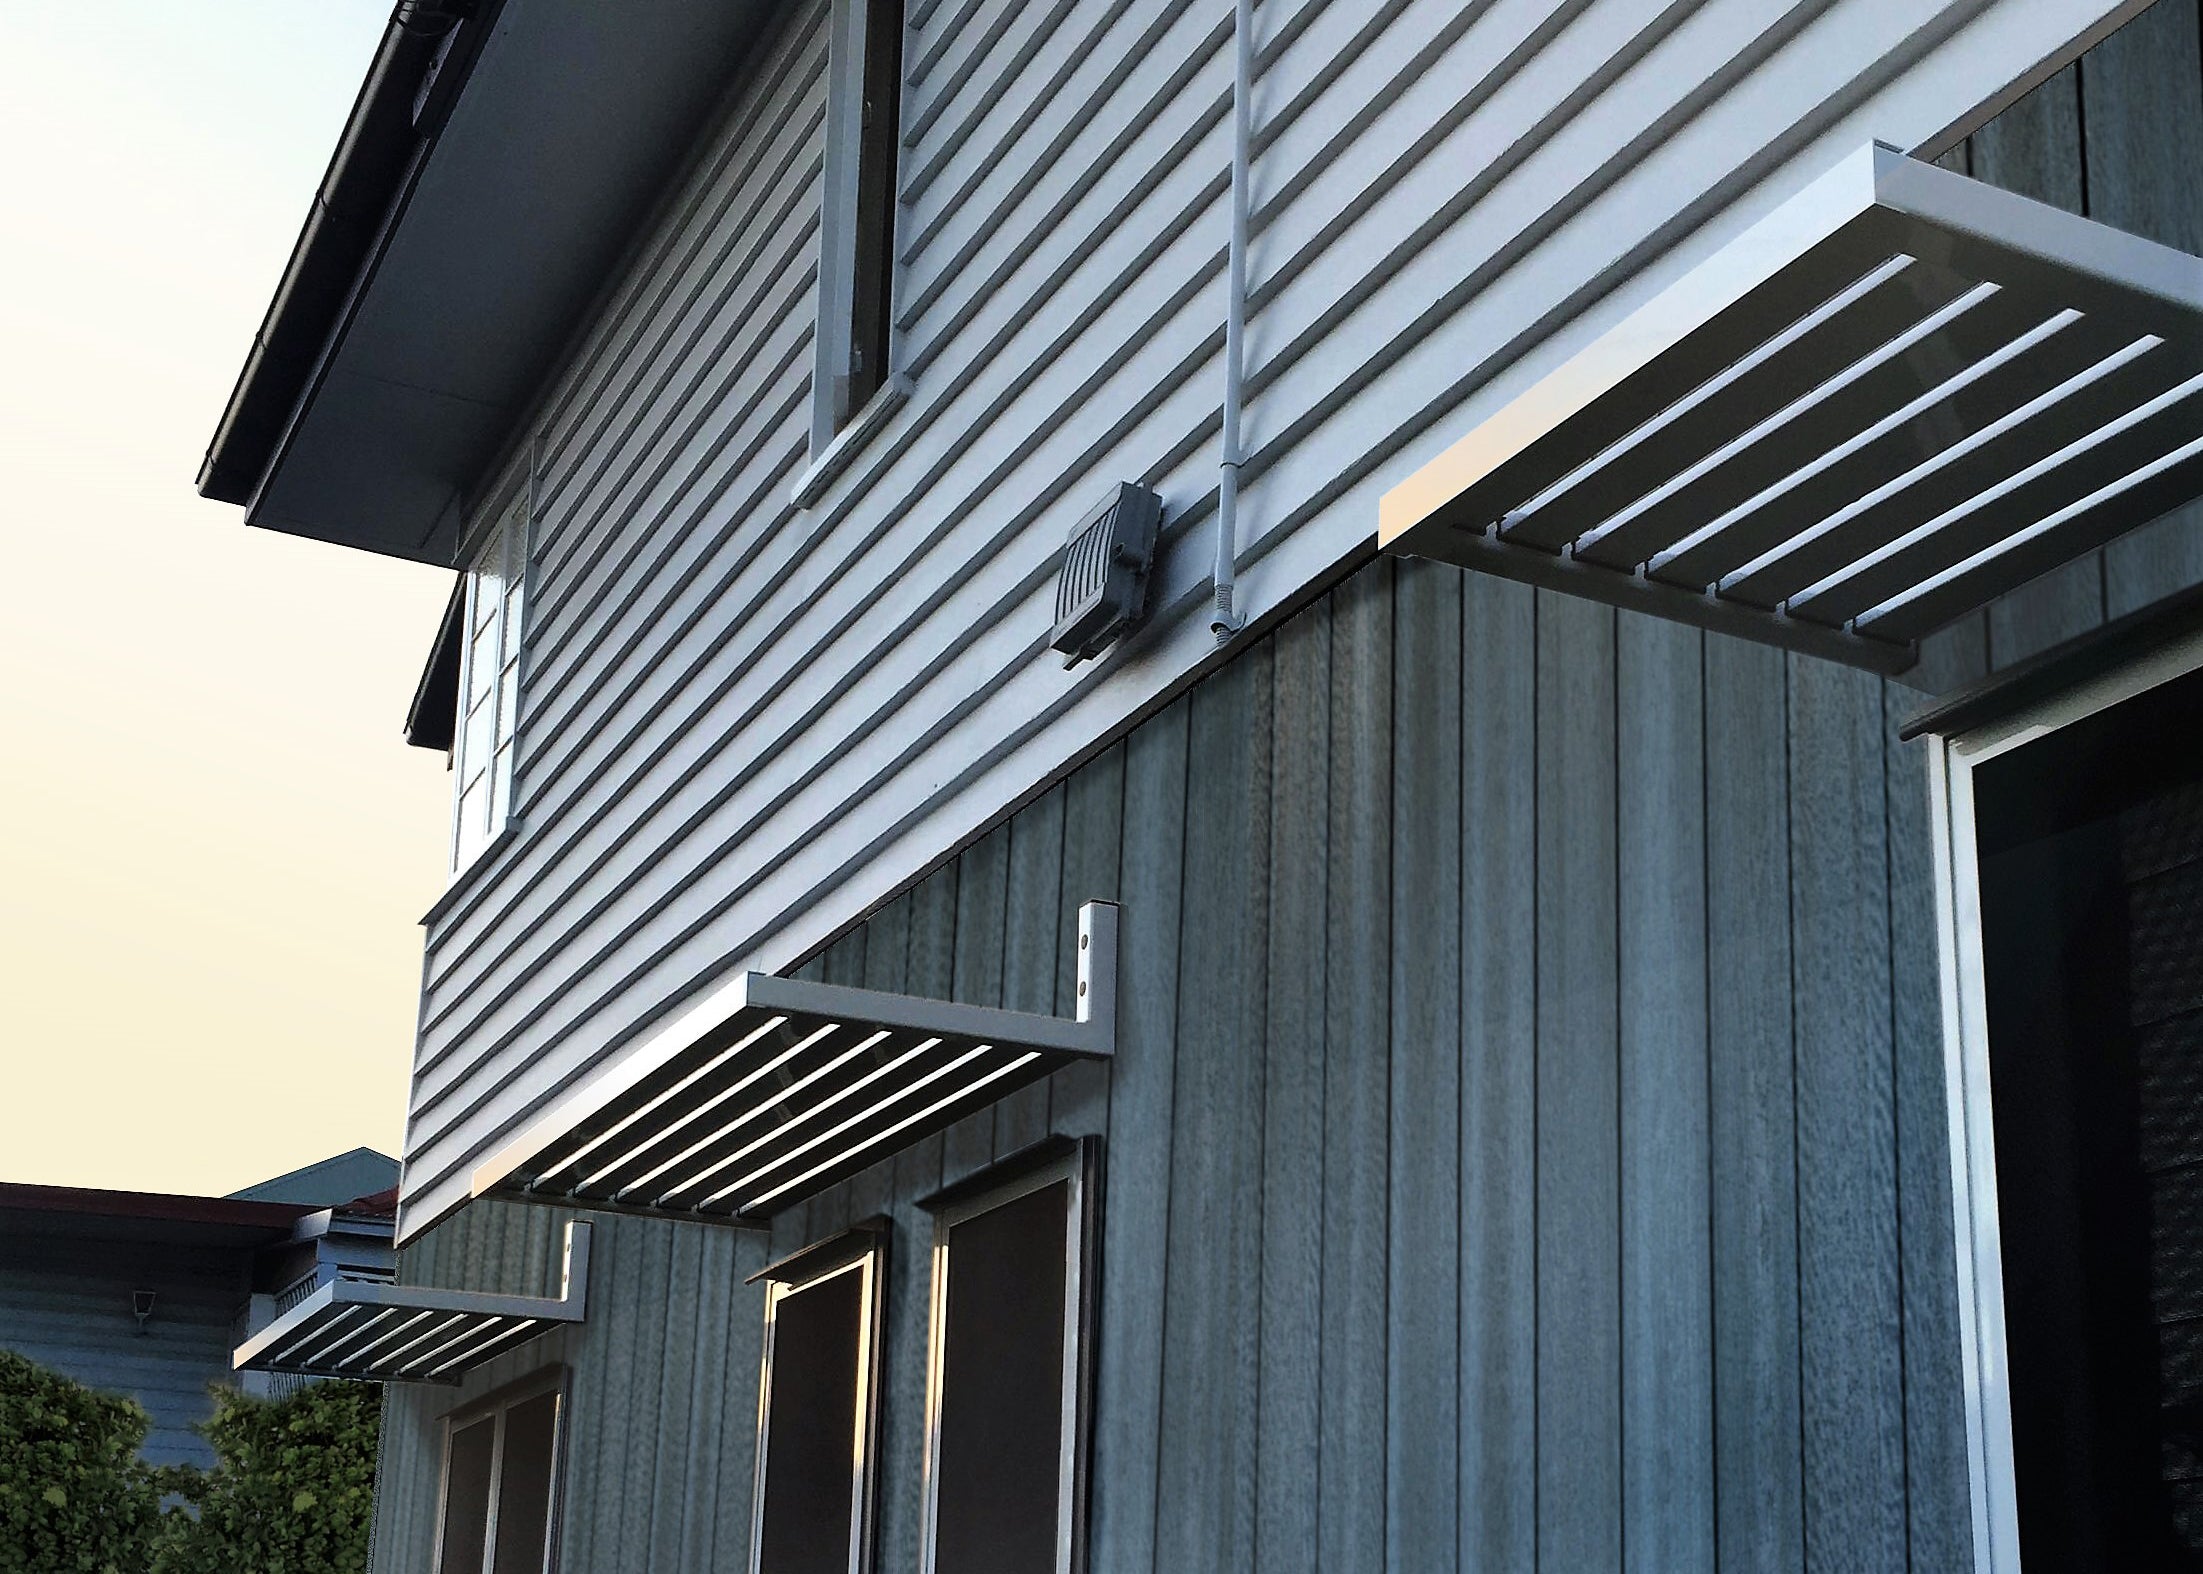 3x Clik'n'Fit® Aluminium Slat Awning in Ironstone on house above windows.